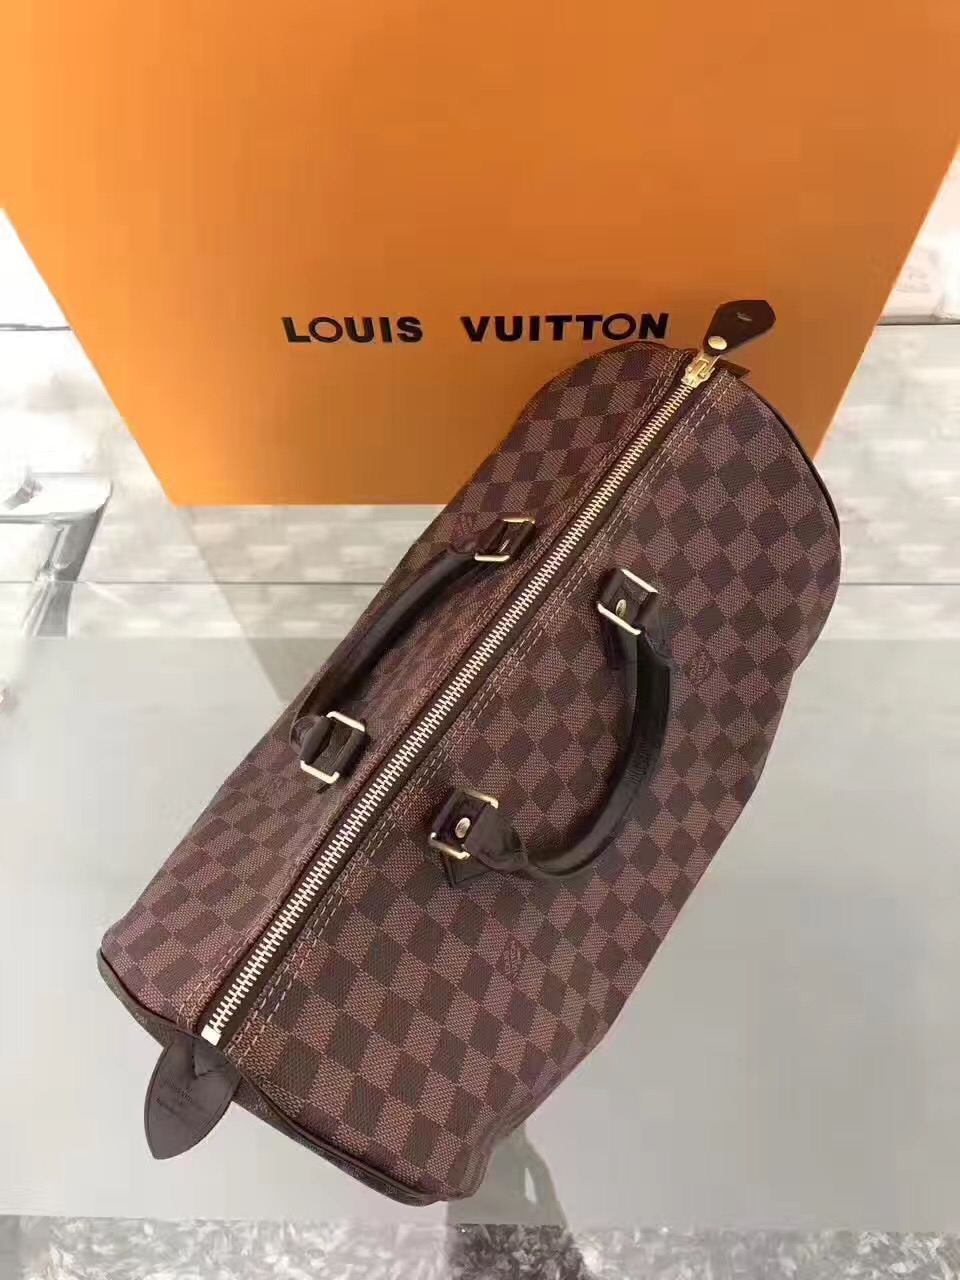 LV Louis Vuitton damier speedy handbags